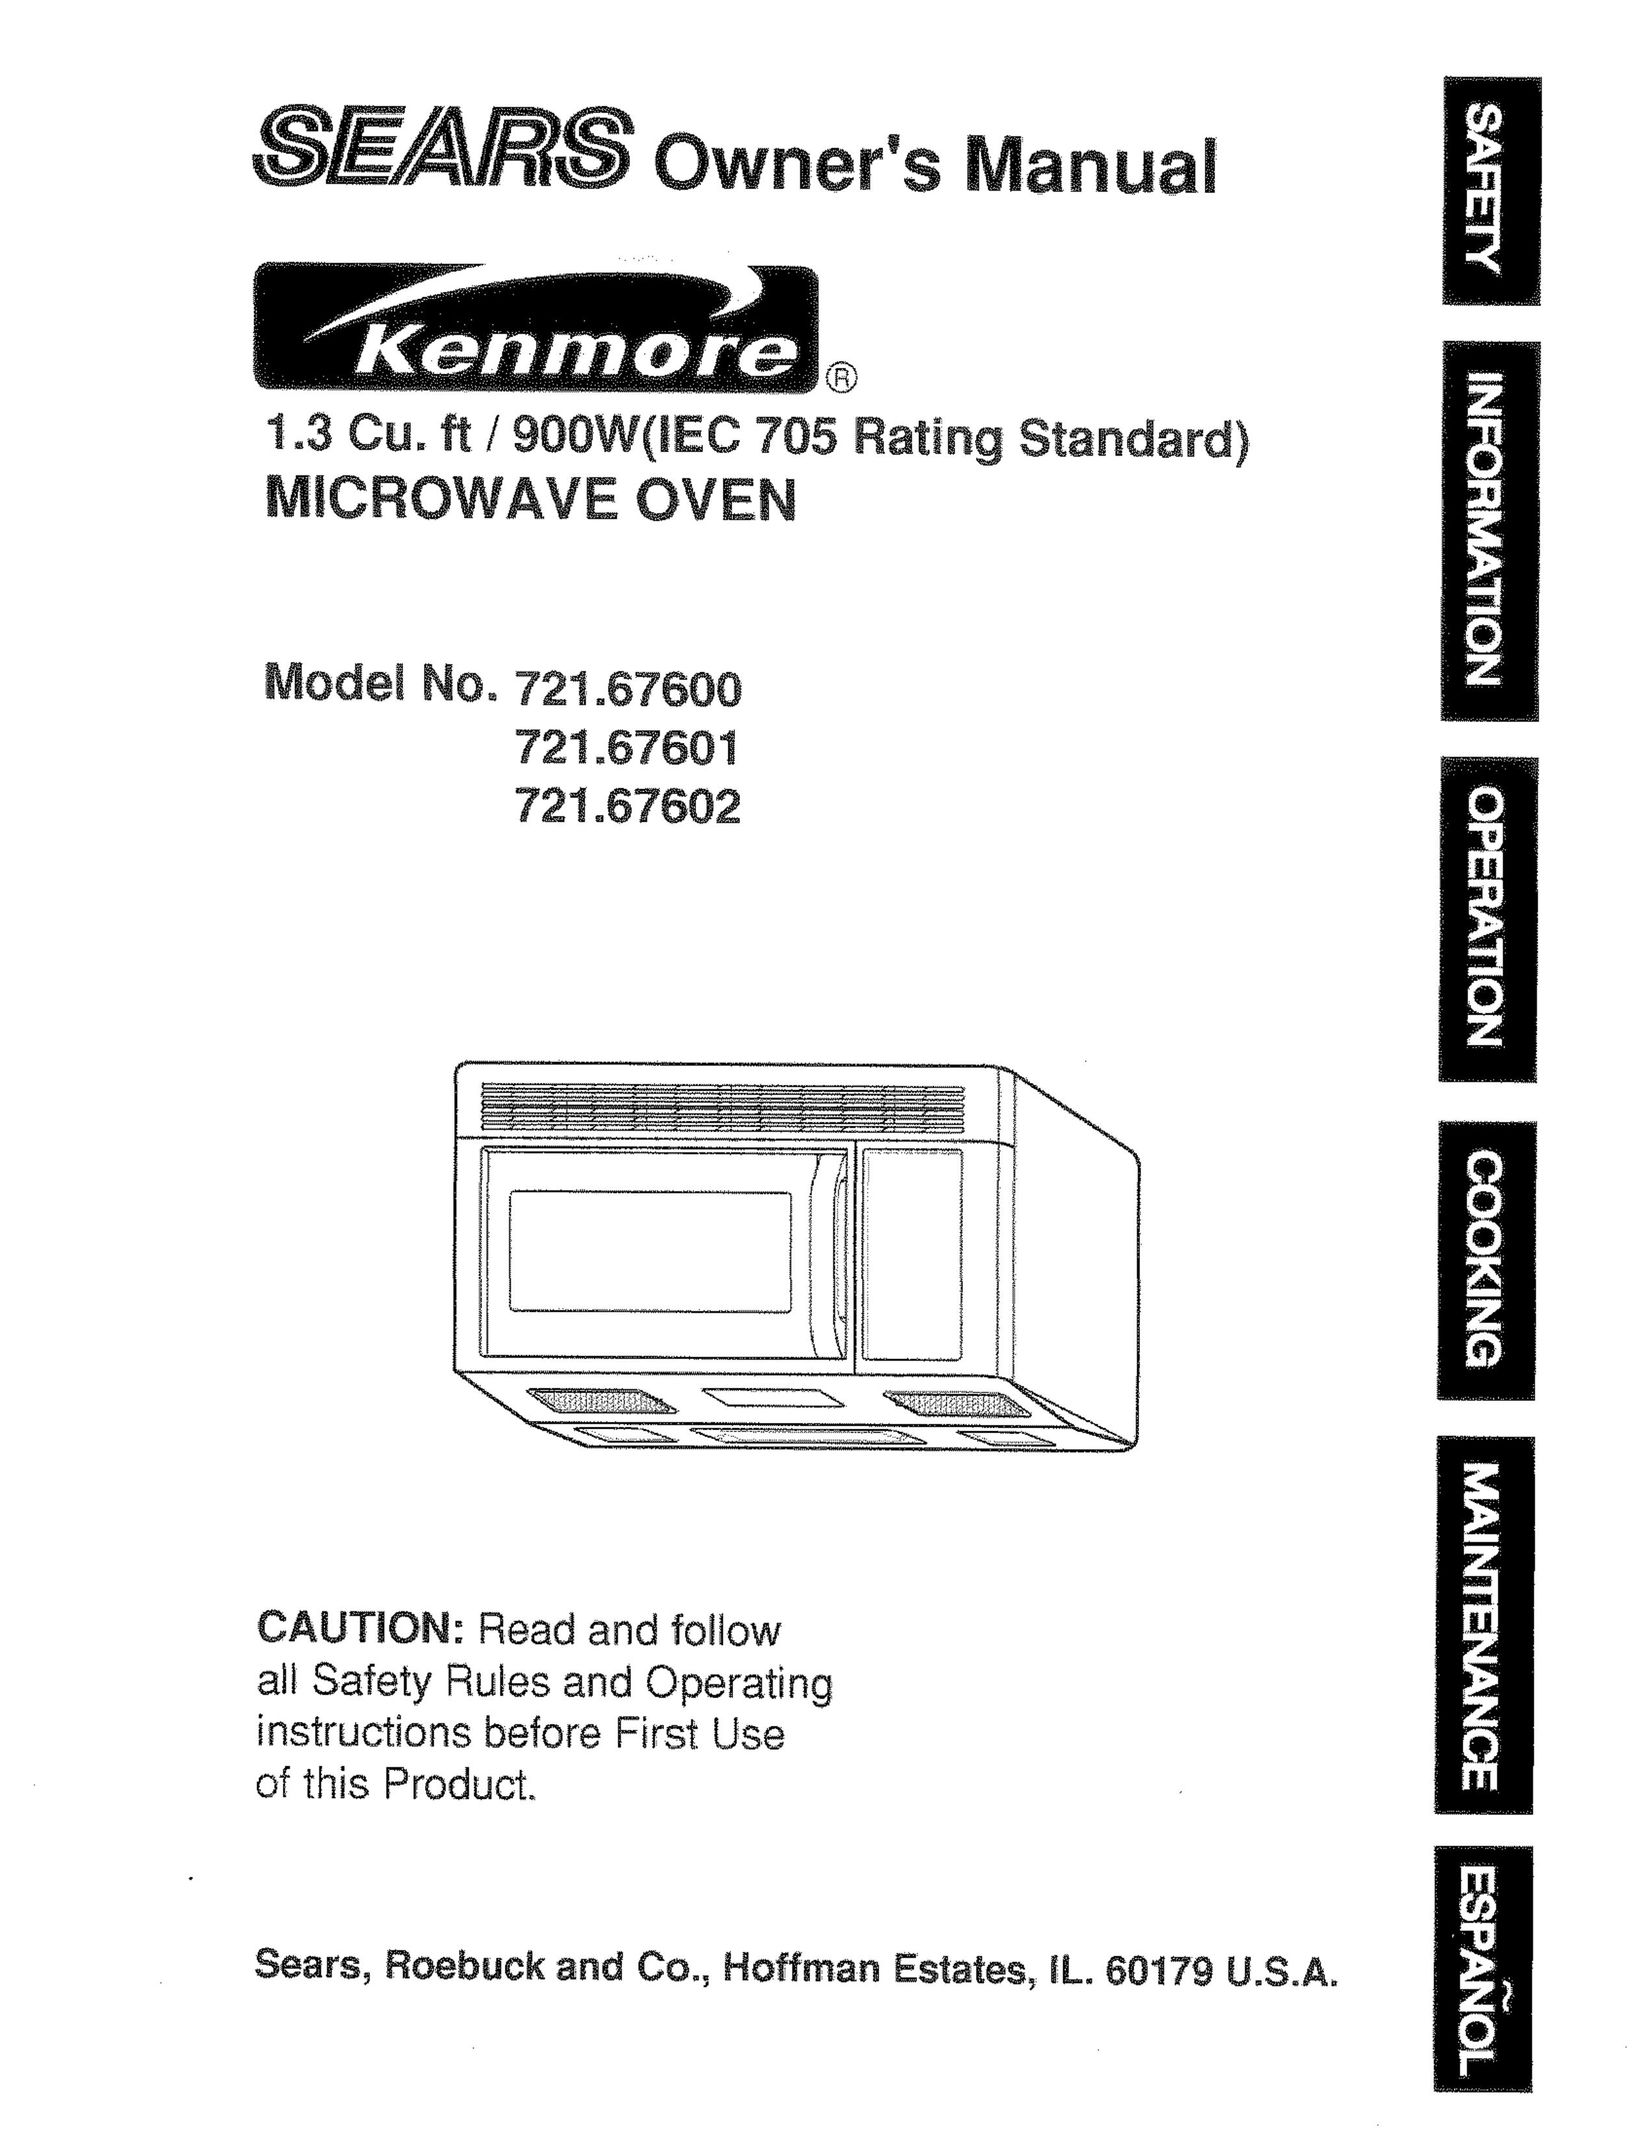 Sears 721.67602 Microwave Oven User Manual